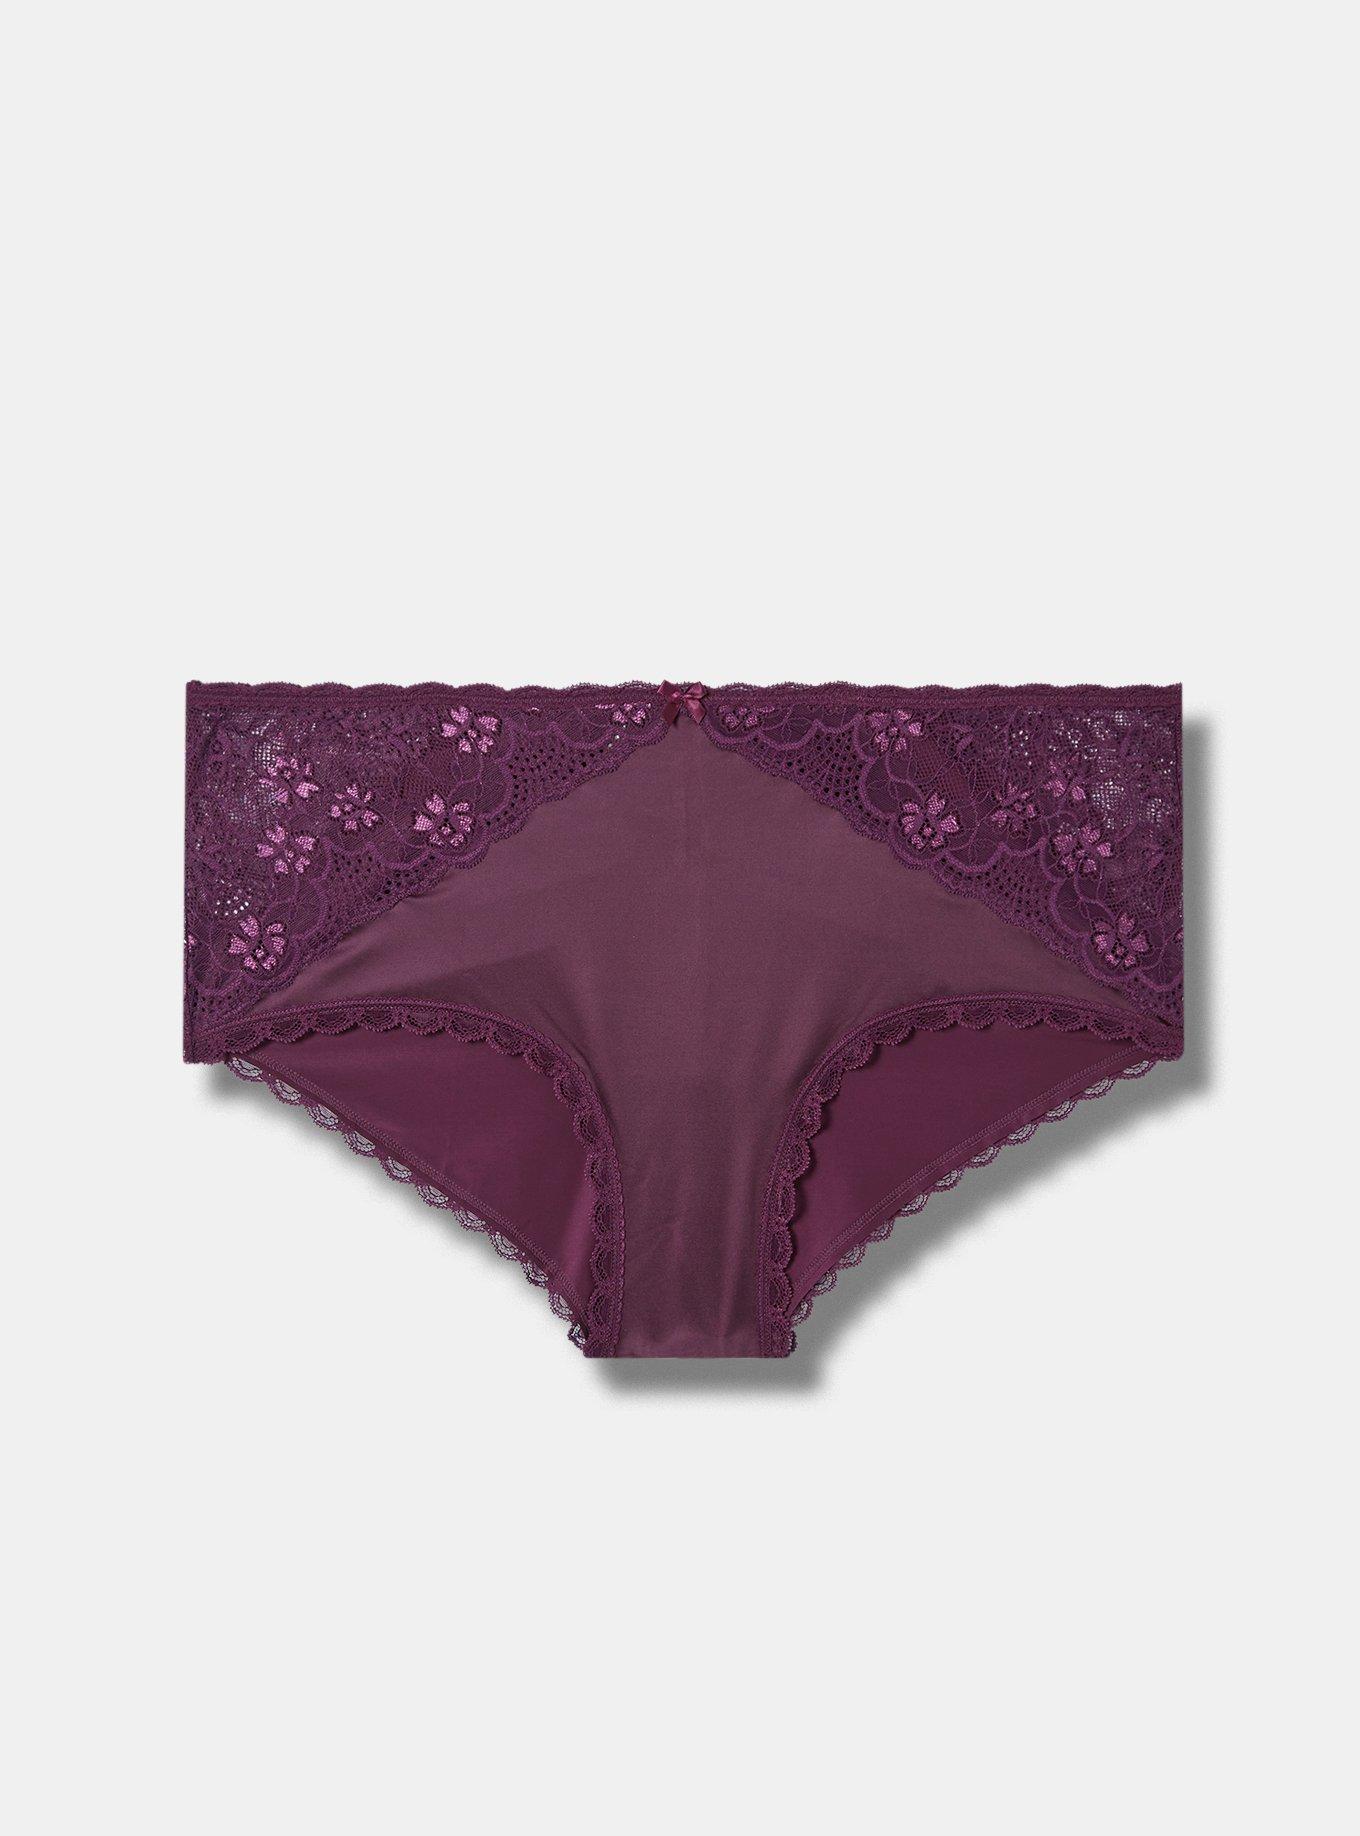 Neiwai Purple High Rise Cheeky Underwear Women's One Size NEW - beyond  exchange